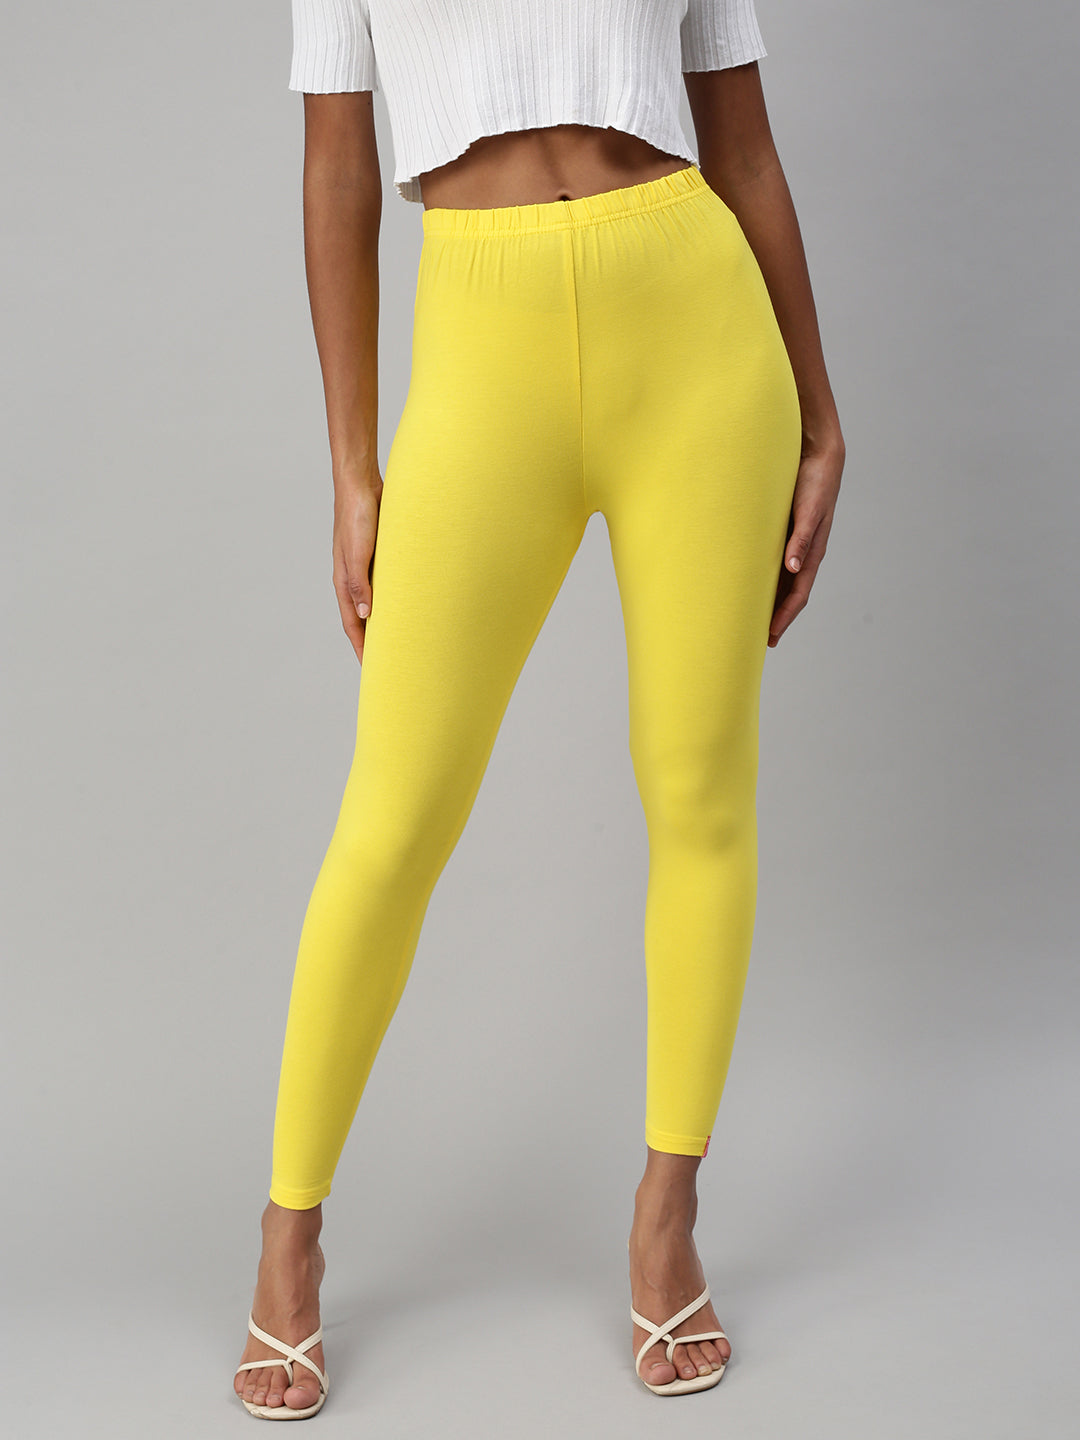 Prisma Women's Skinny Fit Ankle Leggings - Yellow( Lemon )